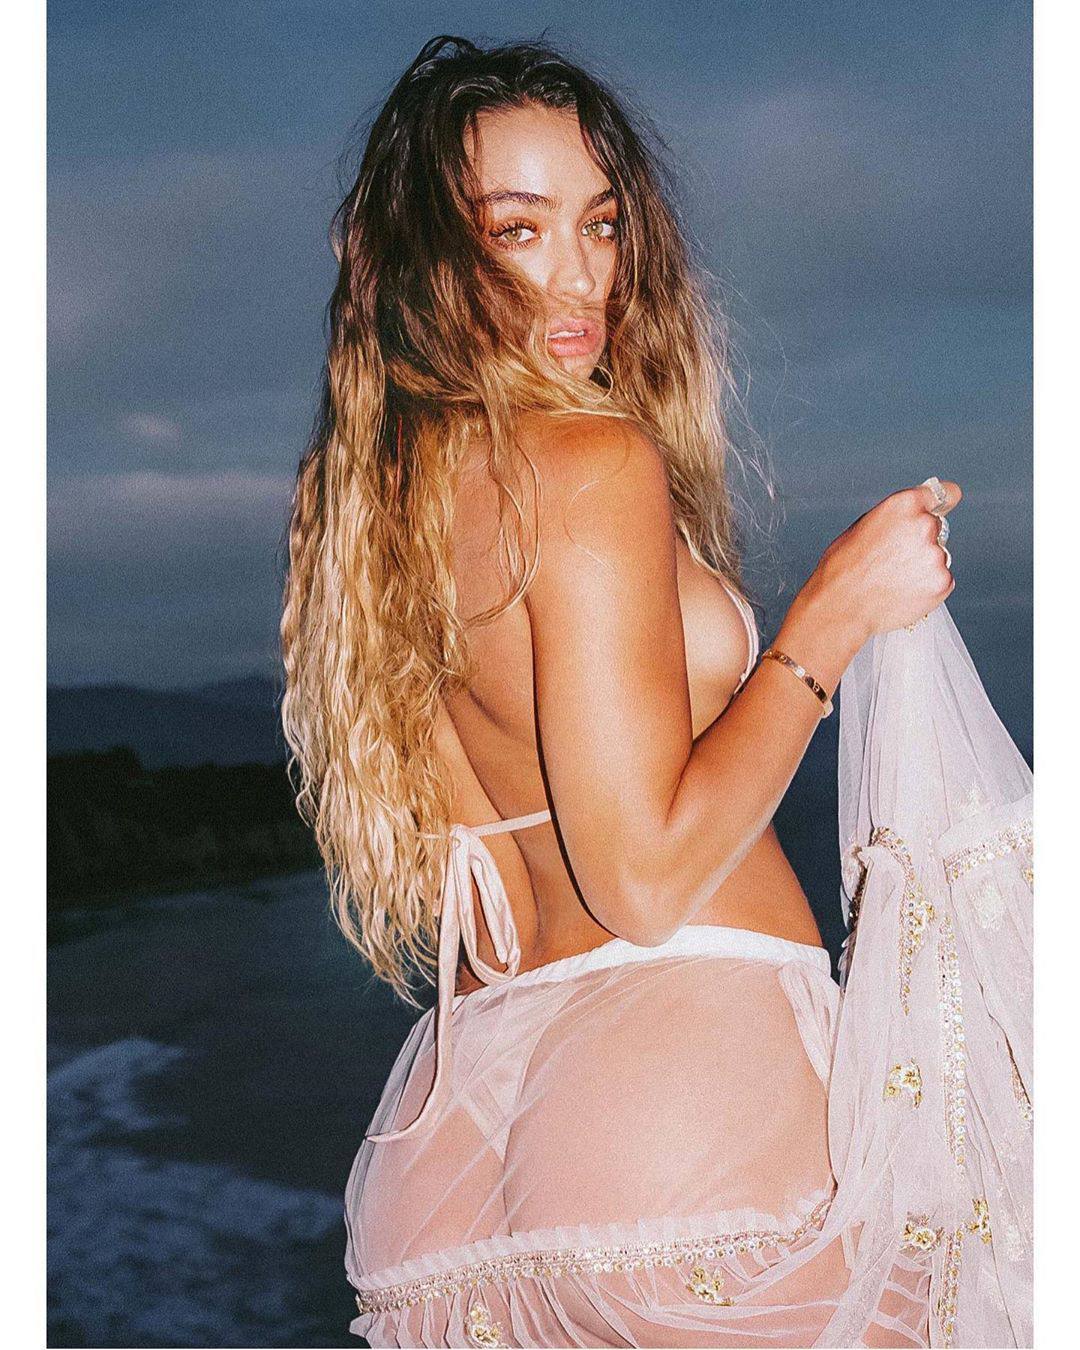 Sommer Ray – Beautiful Ass In Tiny Thong Bikini Photoshoot 0002